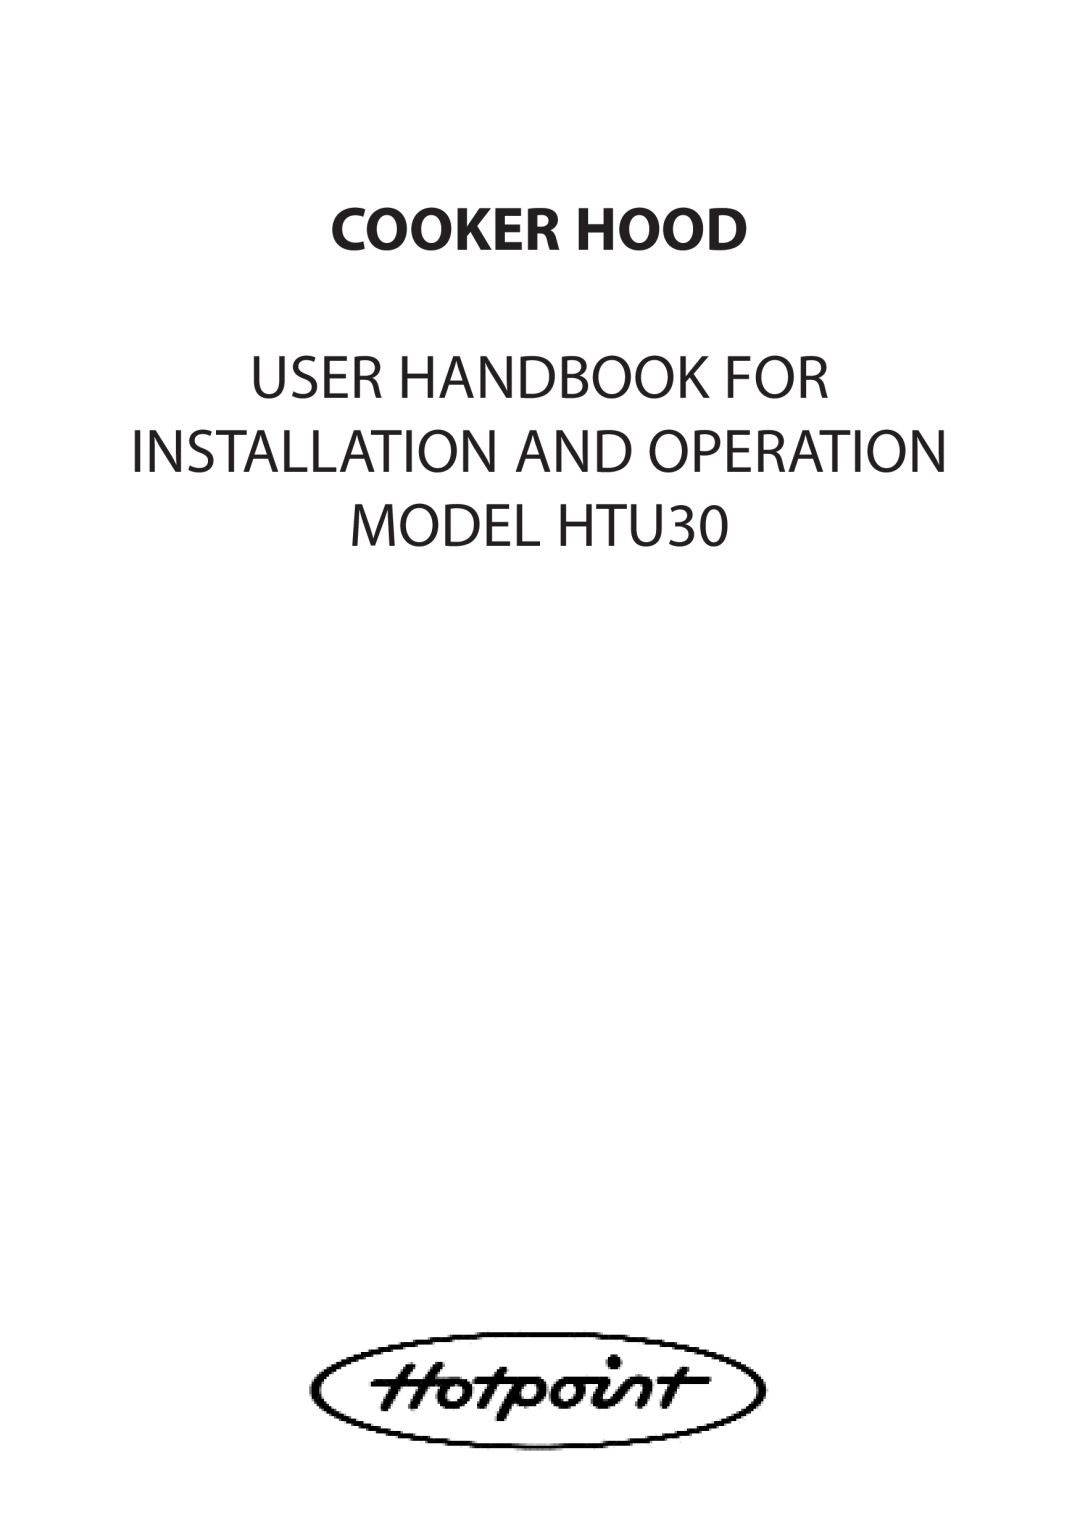 Hotpoint manual Cooker Hood, User Handbook For, MODEL HTU30, Installation And Operation 